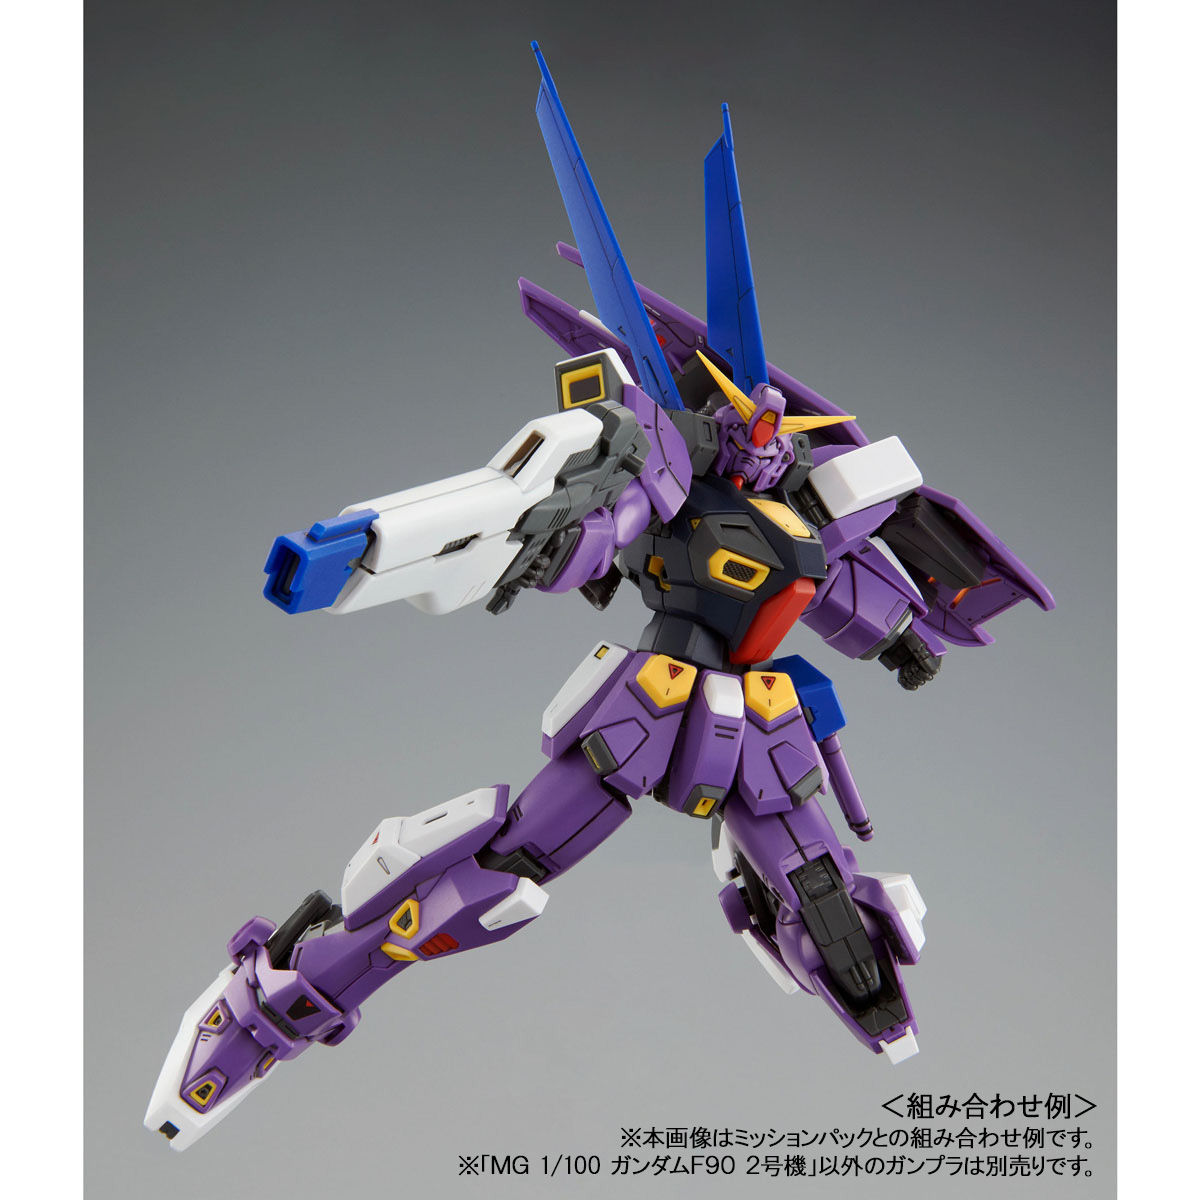 MG 1/100 Formula 90 Gundam F90 Unit 2